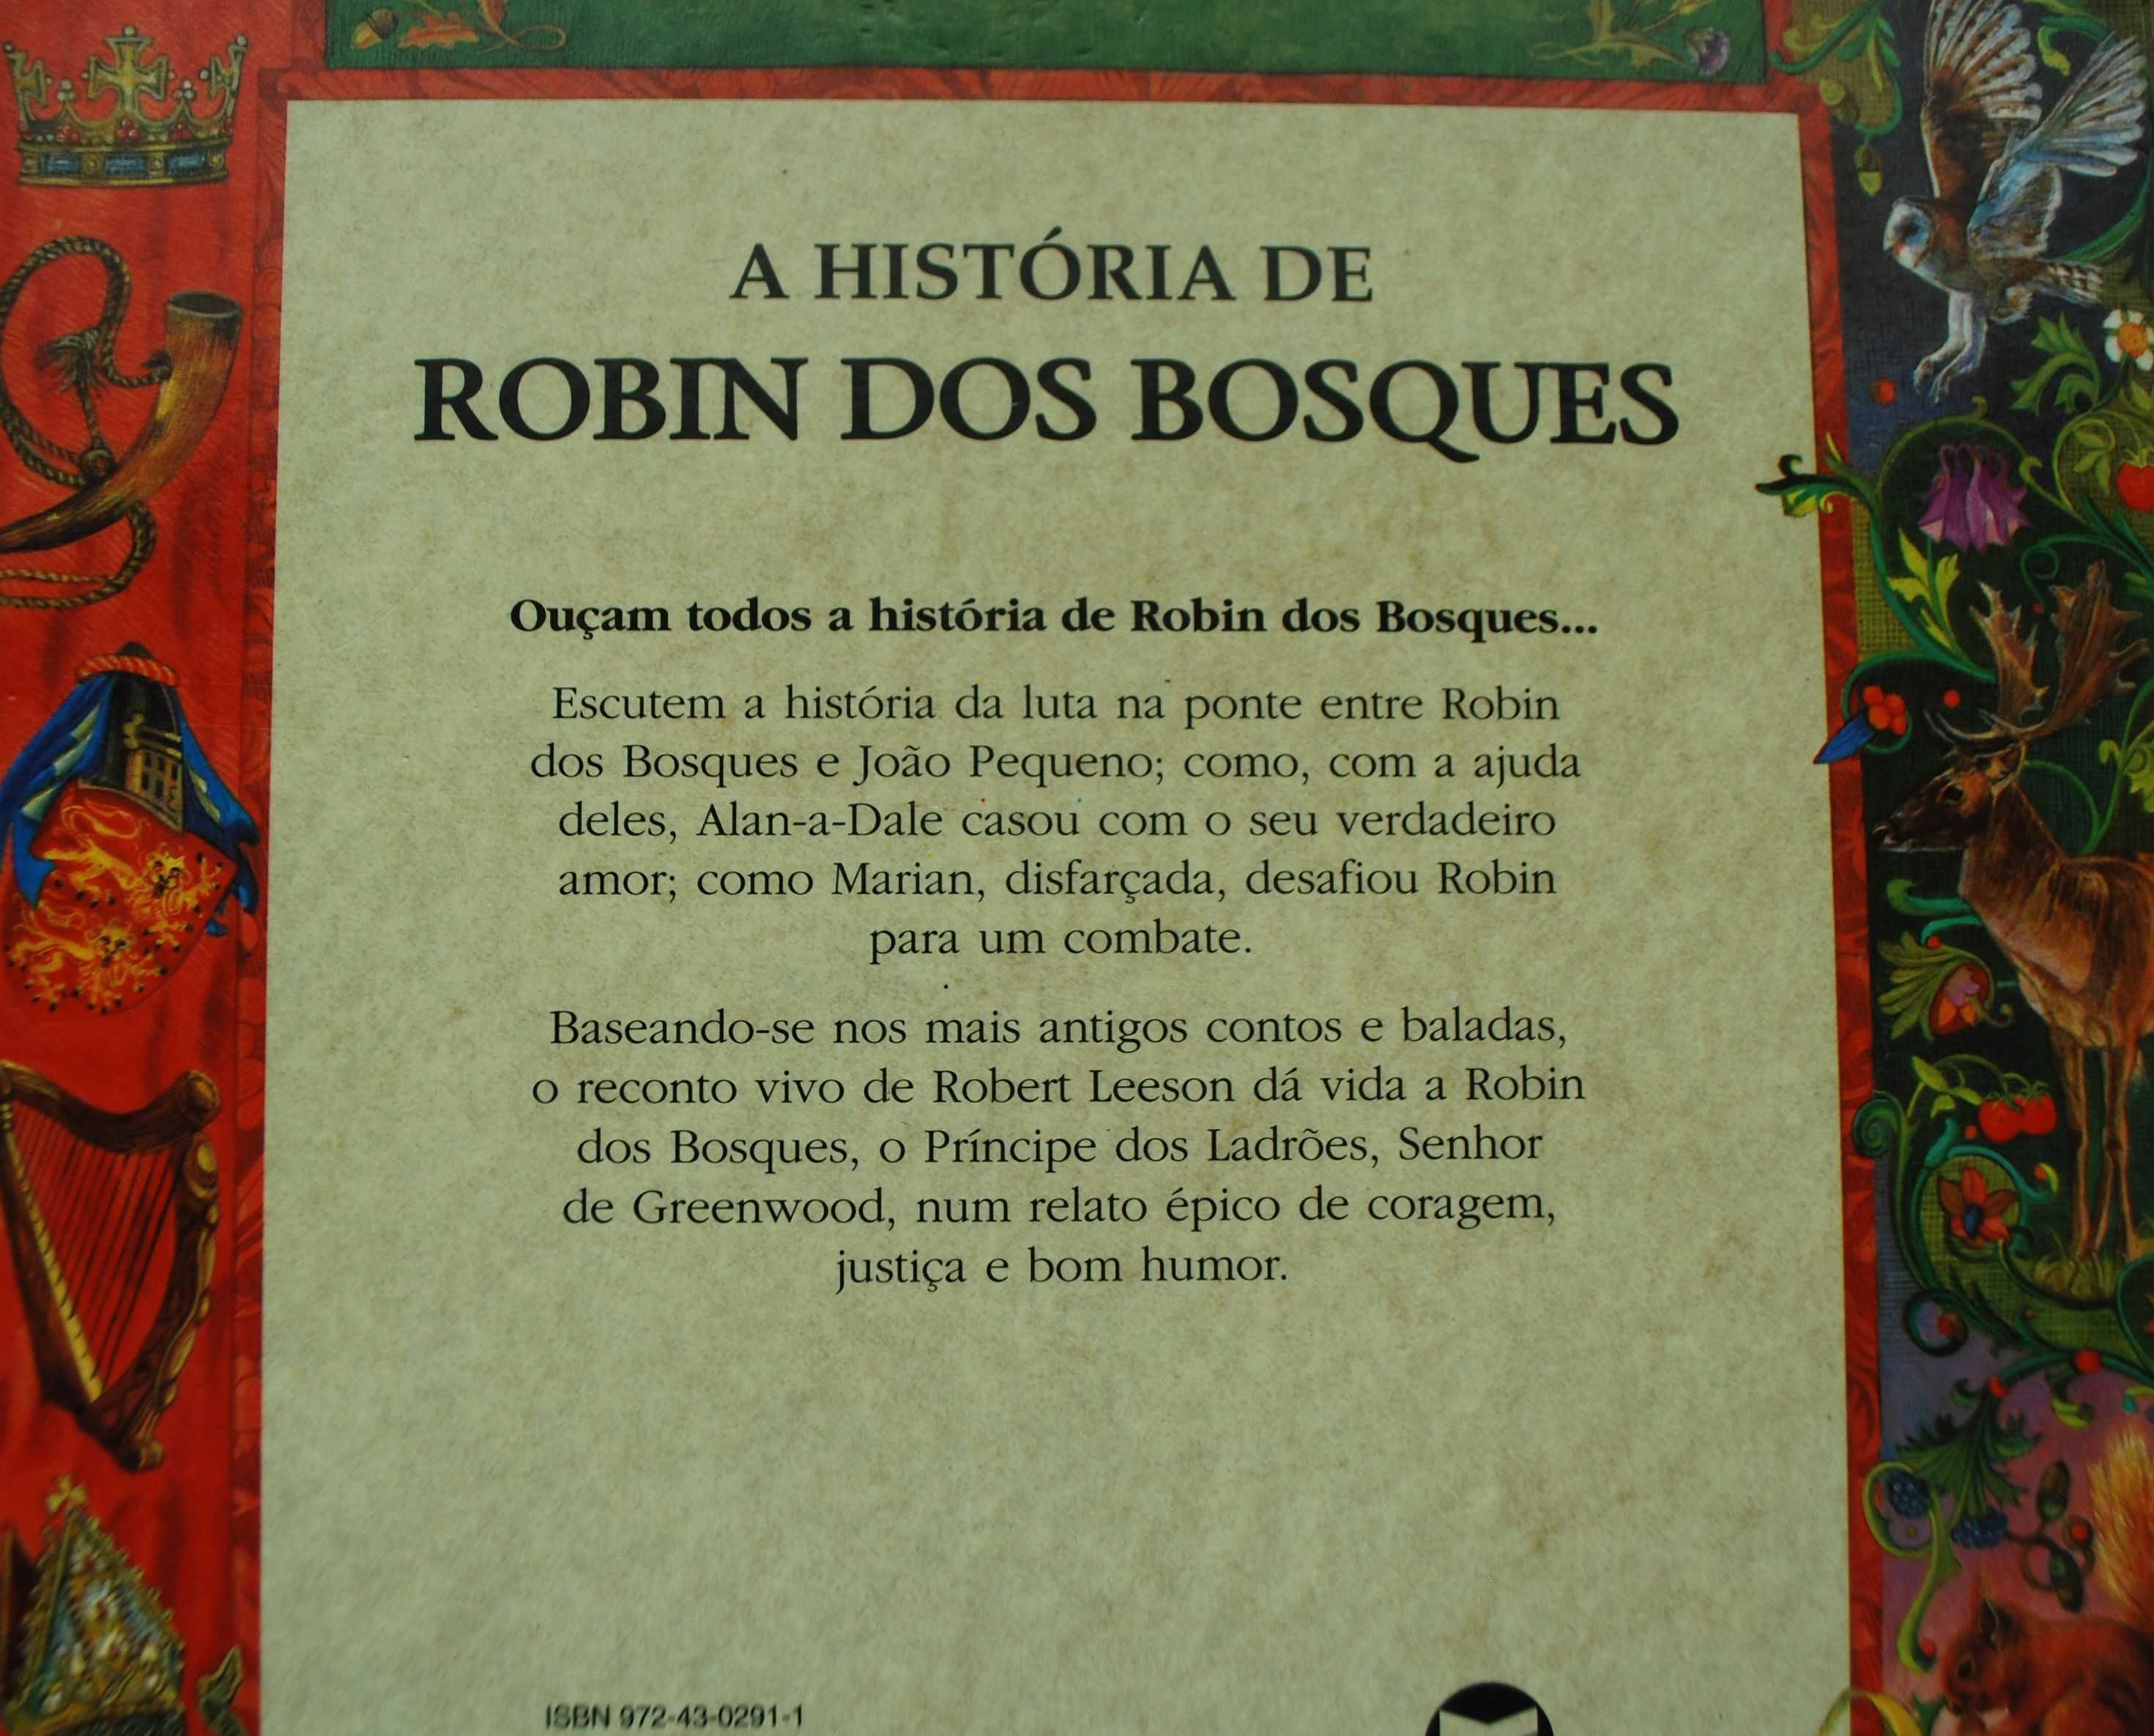 A História de Robin dos Bosques